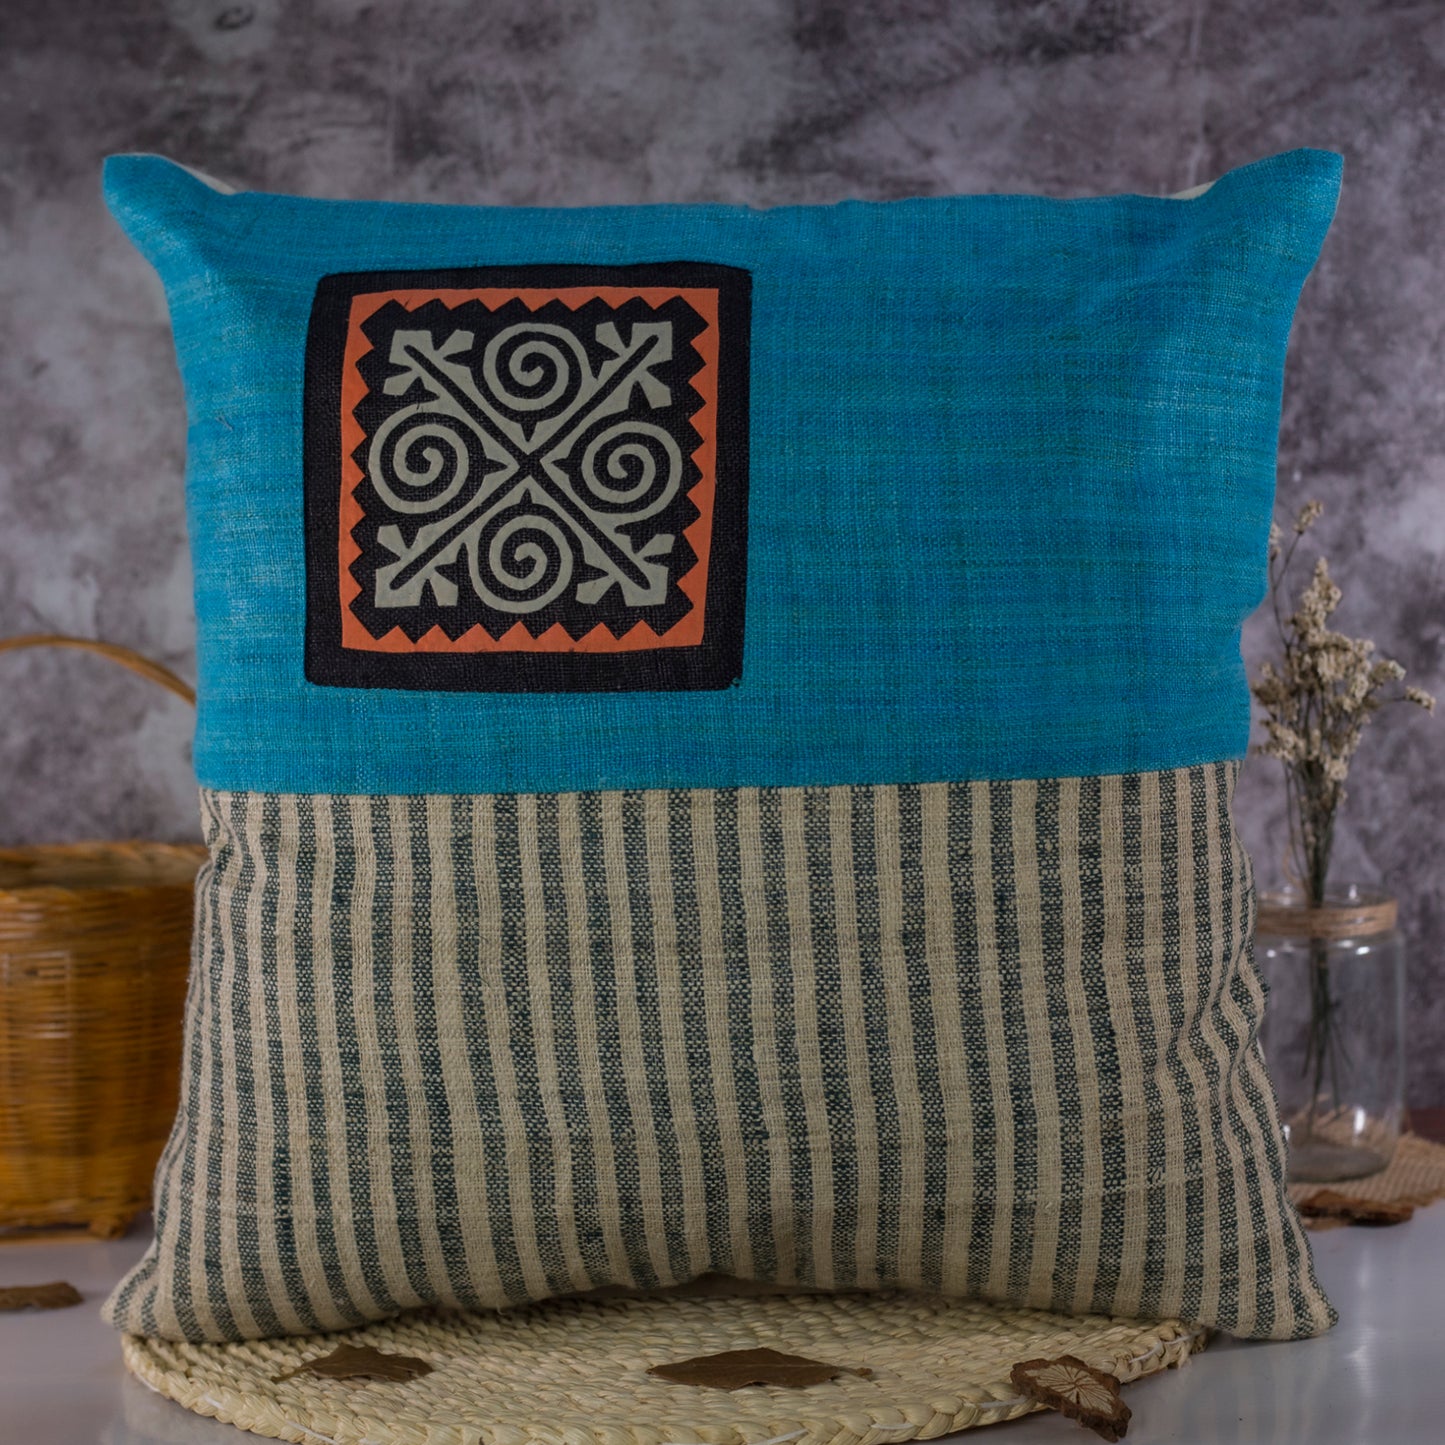 Hemp Cushion Cover in Iris Blue - H'mong pattern, handwoven fabric stripes, handmade 100%